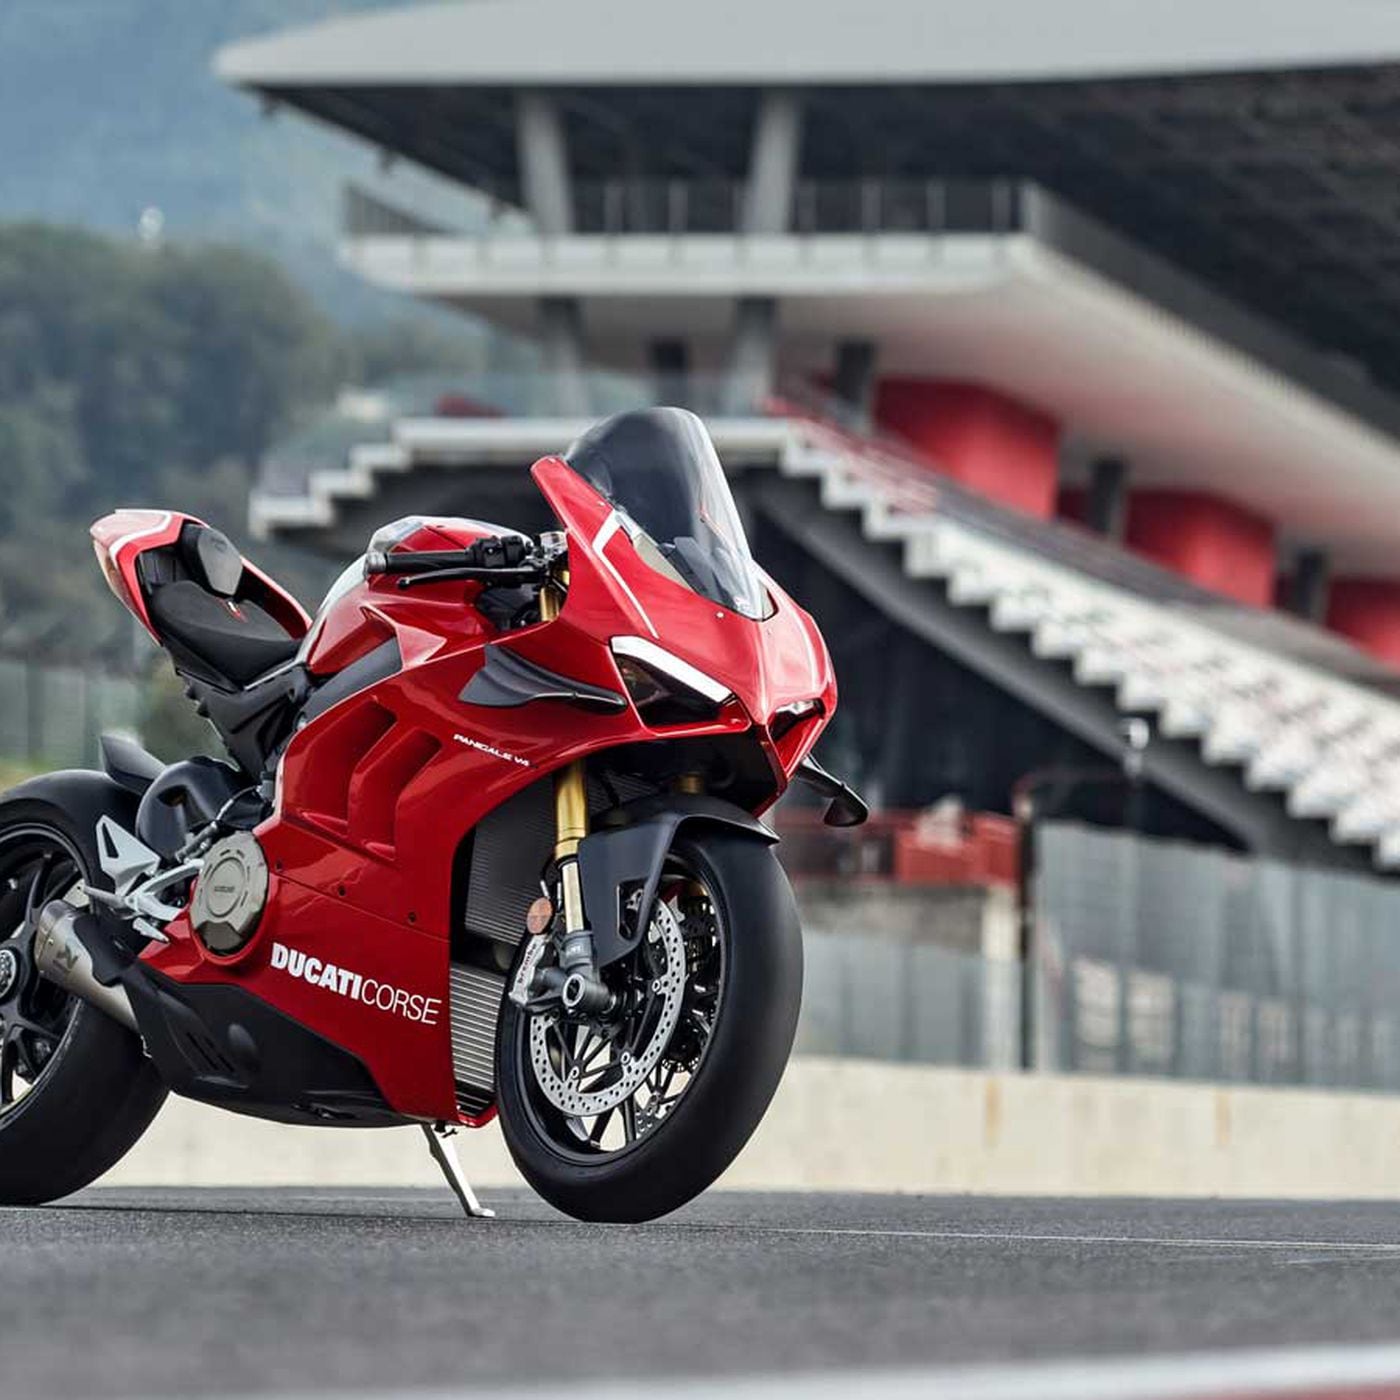 belønning Dalset arbejde 2019 Ducati Panigale V4 R First Look | Motorcyclist